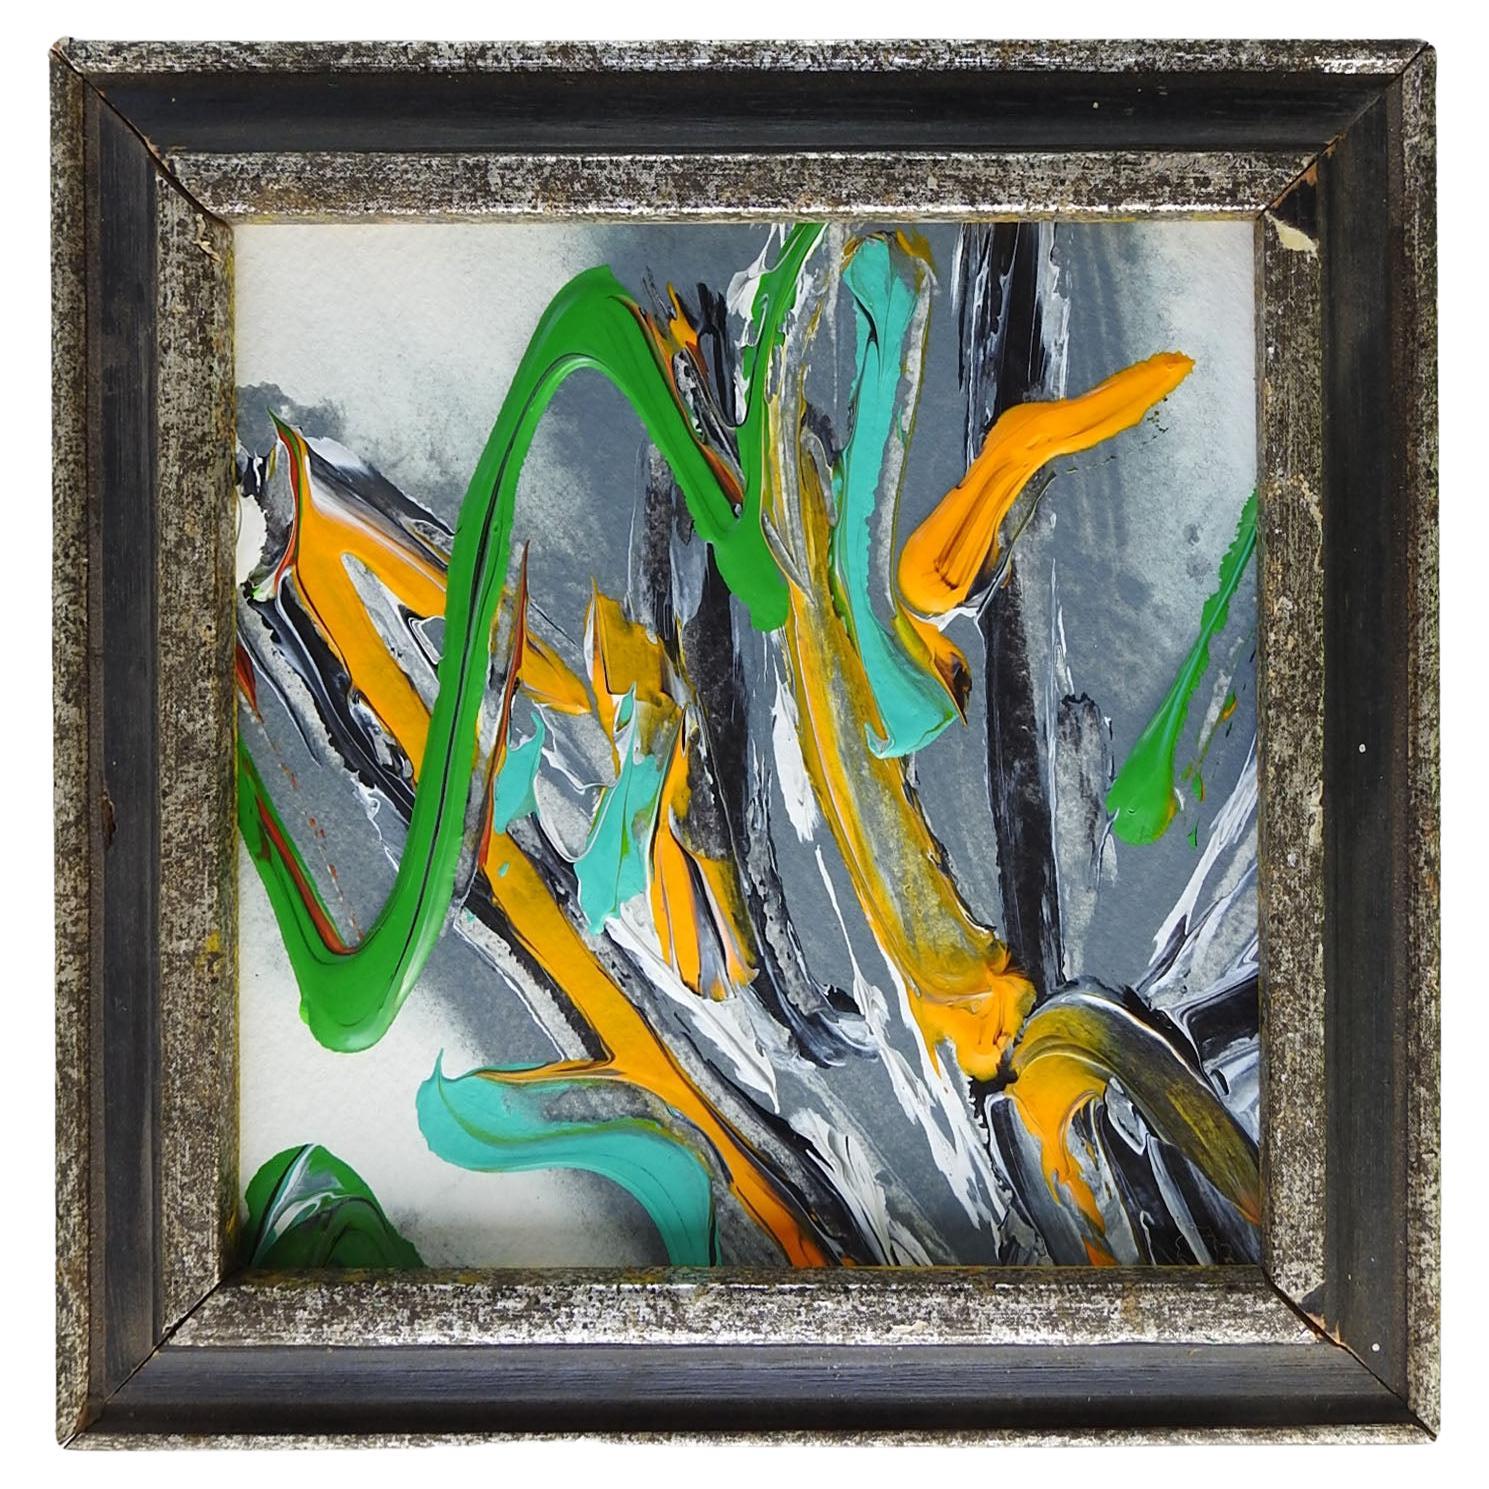 Petite peinture abstraite vintage abstraite vert, jaune et gris